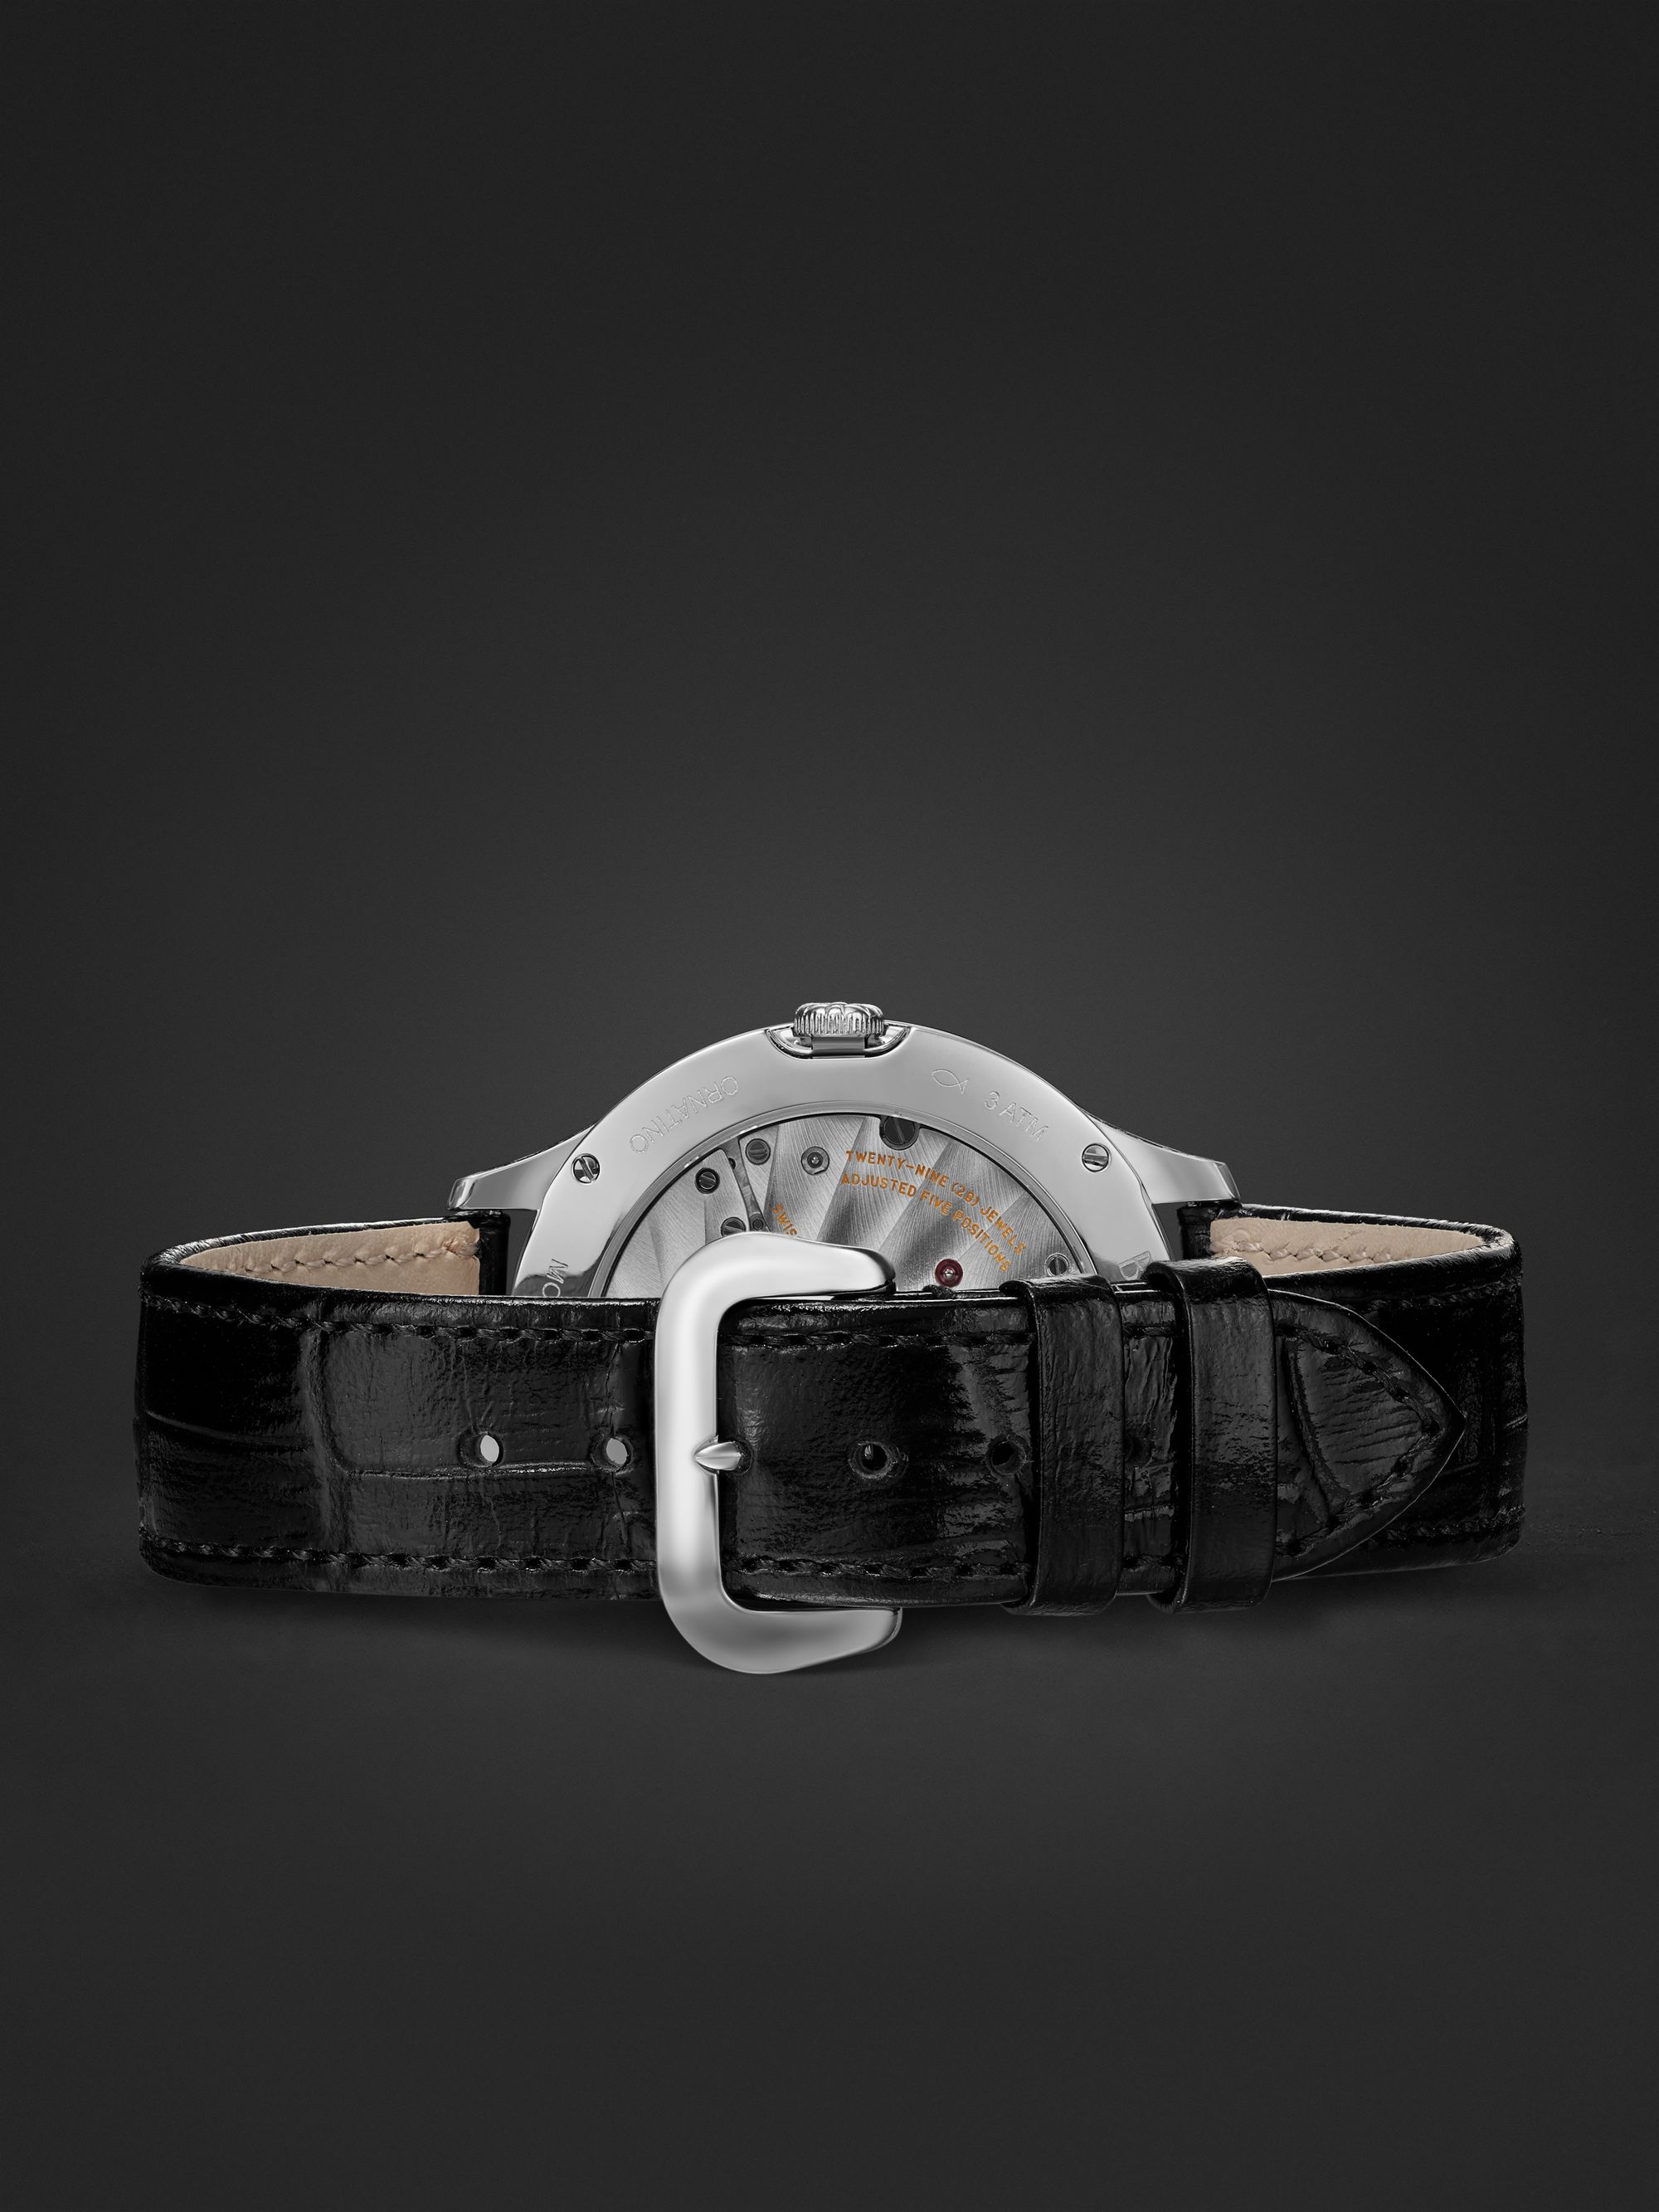 BUCCELLATI Ornatino Automatic 42mm 18-Karat White Gold and Croc-Effect Leather Watch, Ref. No. WAUMGE014581